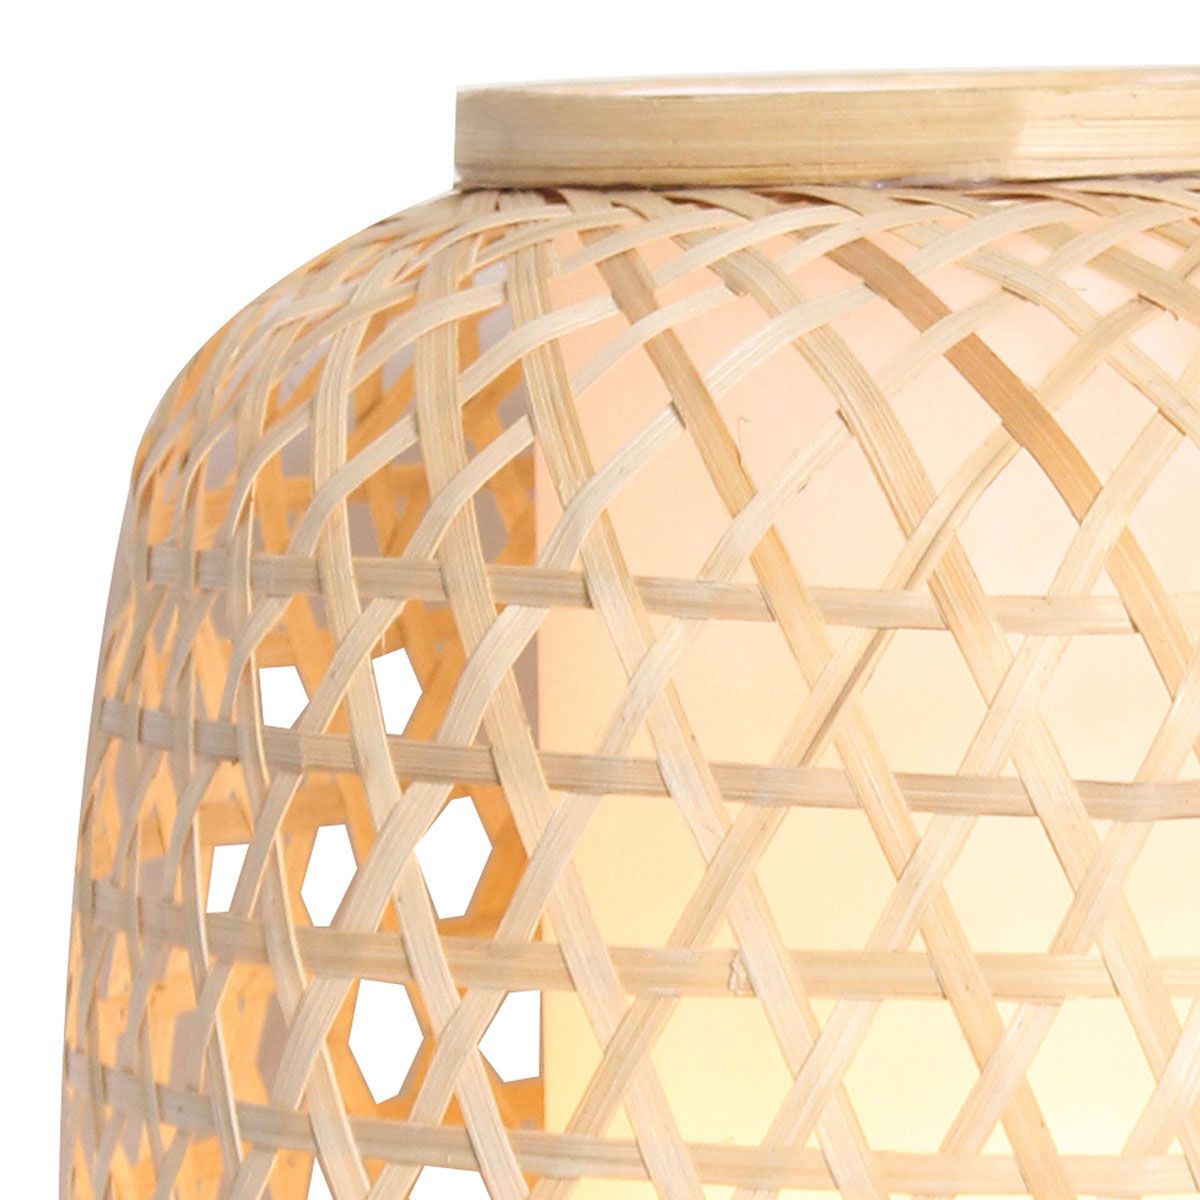 Lampe à poser ORGANIC (H30cm) en bambou naturel